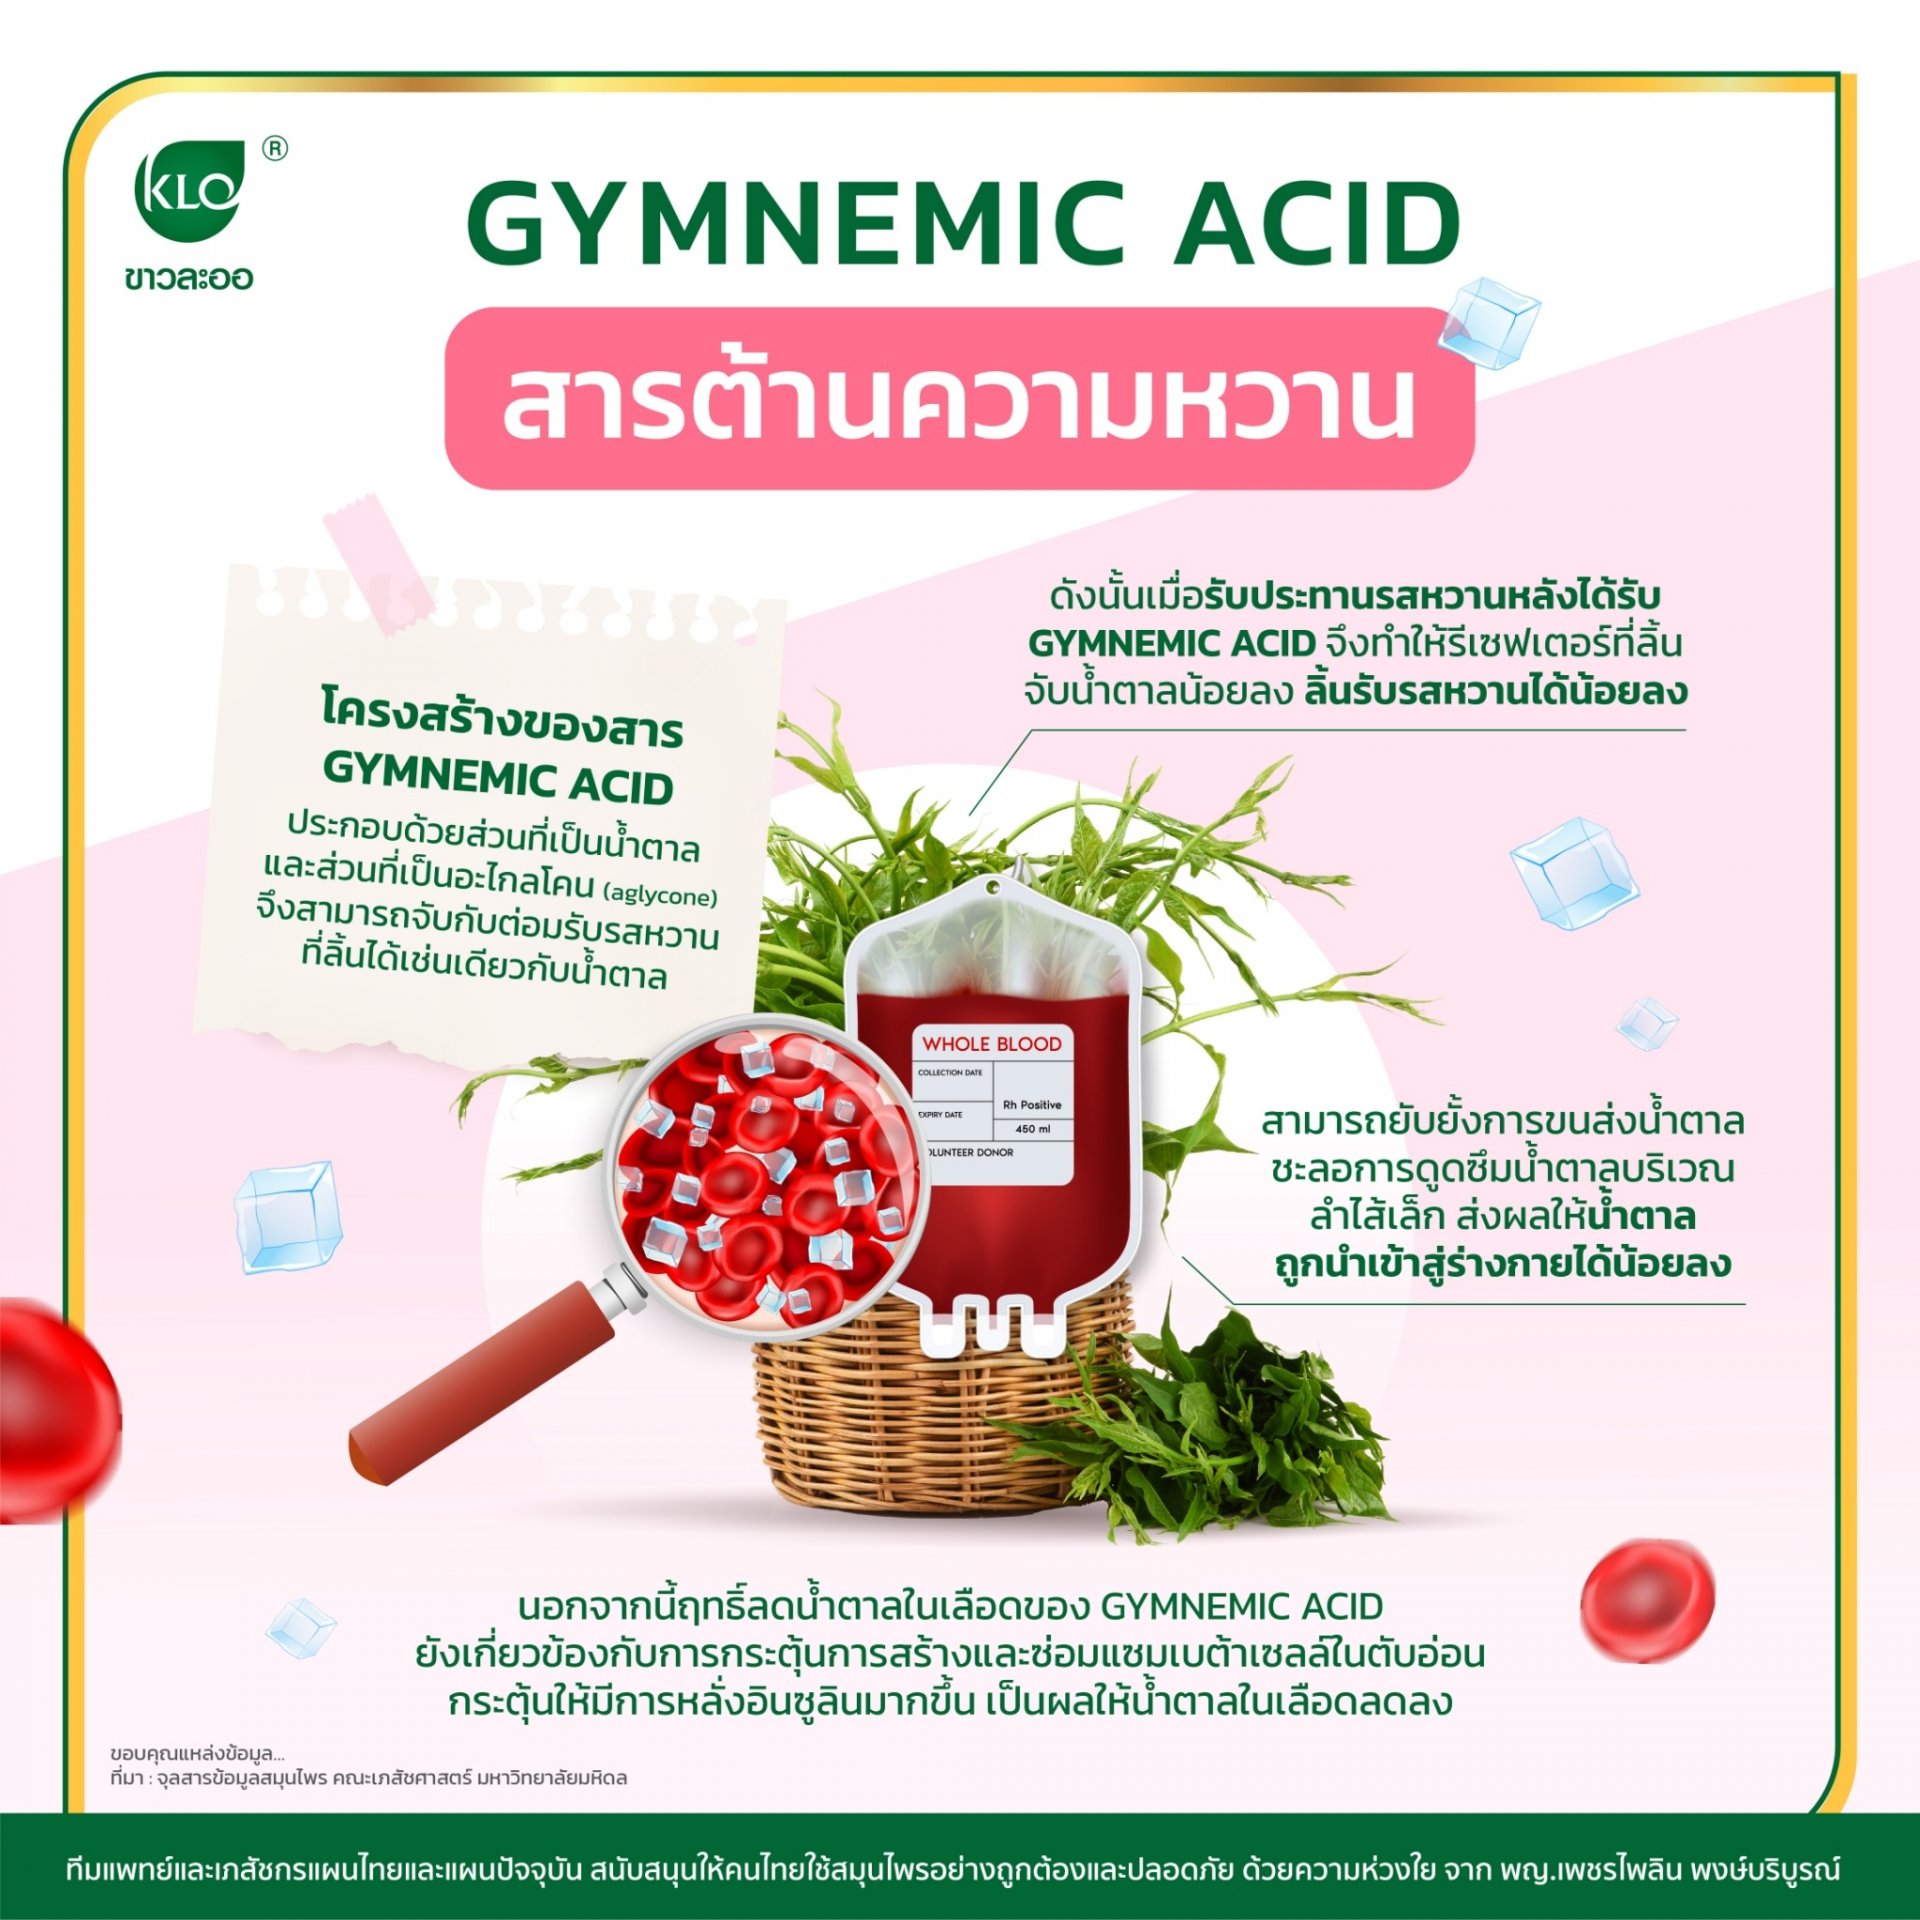 Gymnemic acid, an anti-sweetener